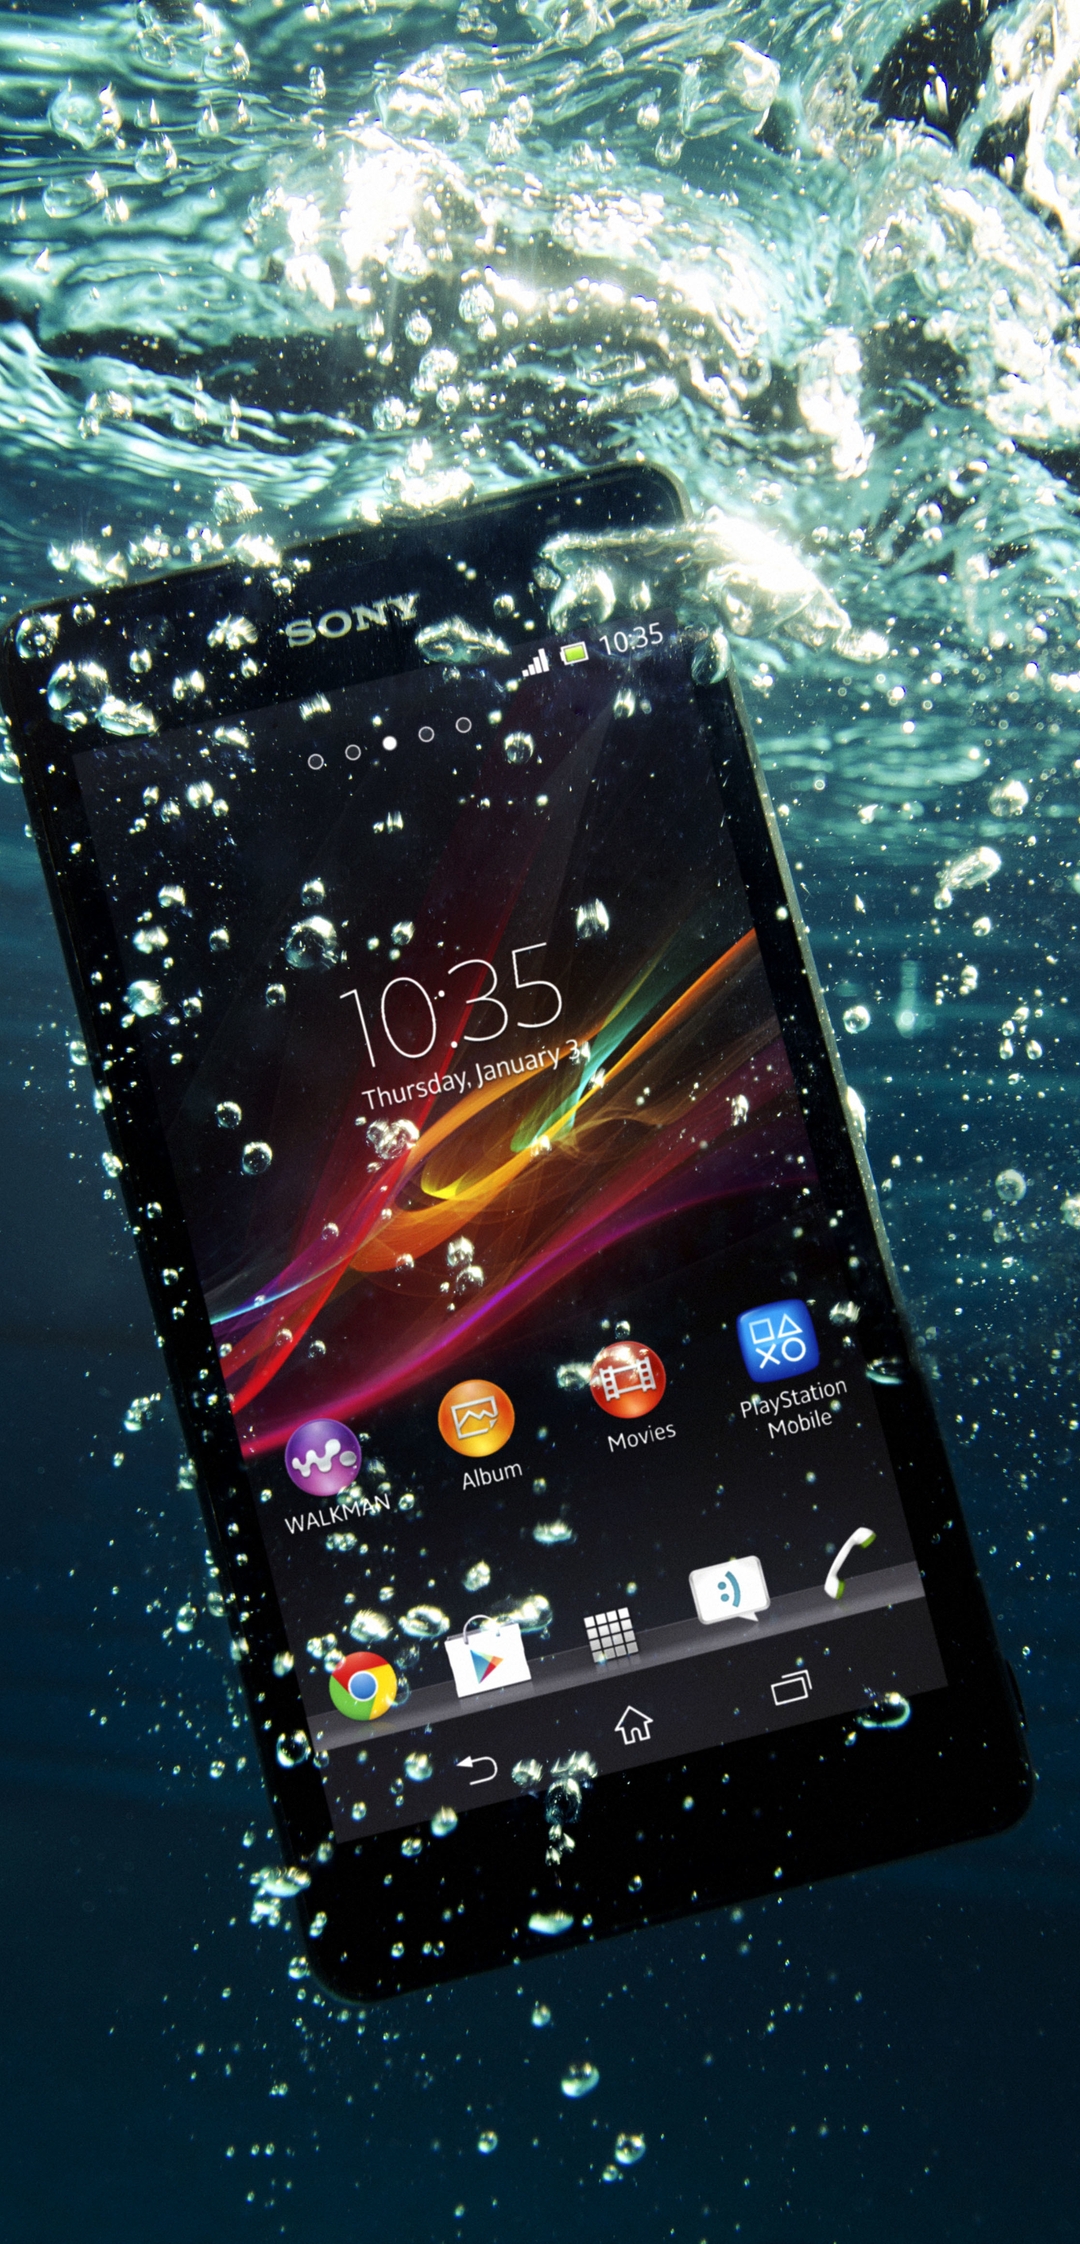 Картинка: Телефон, смартфон, Sony, Android, время, вода, пузырьки